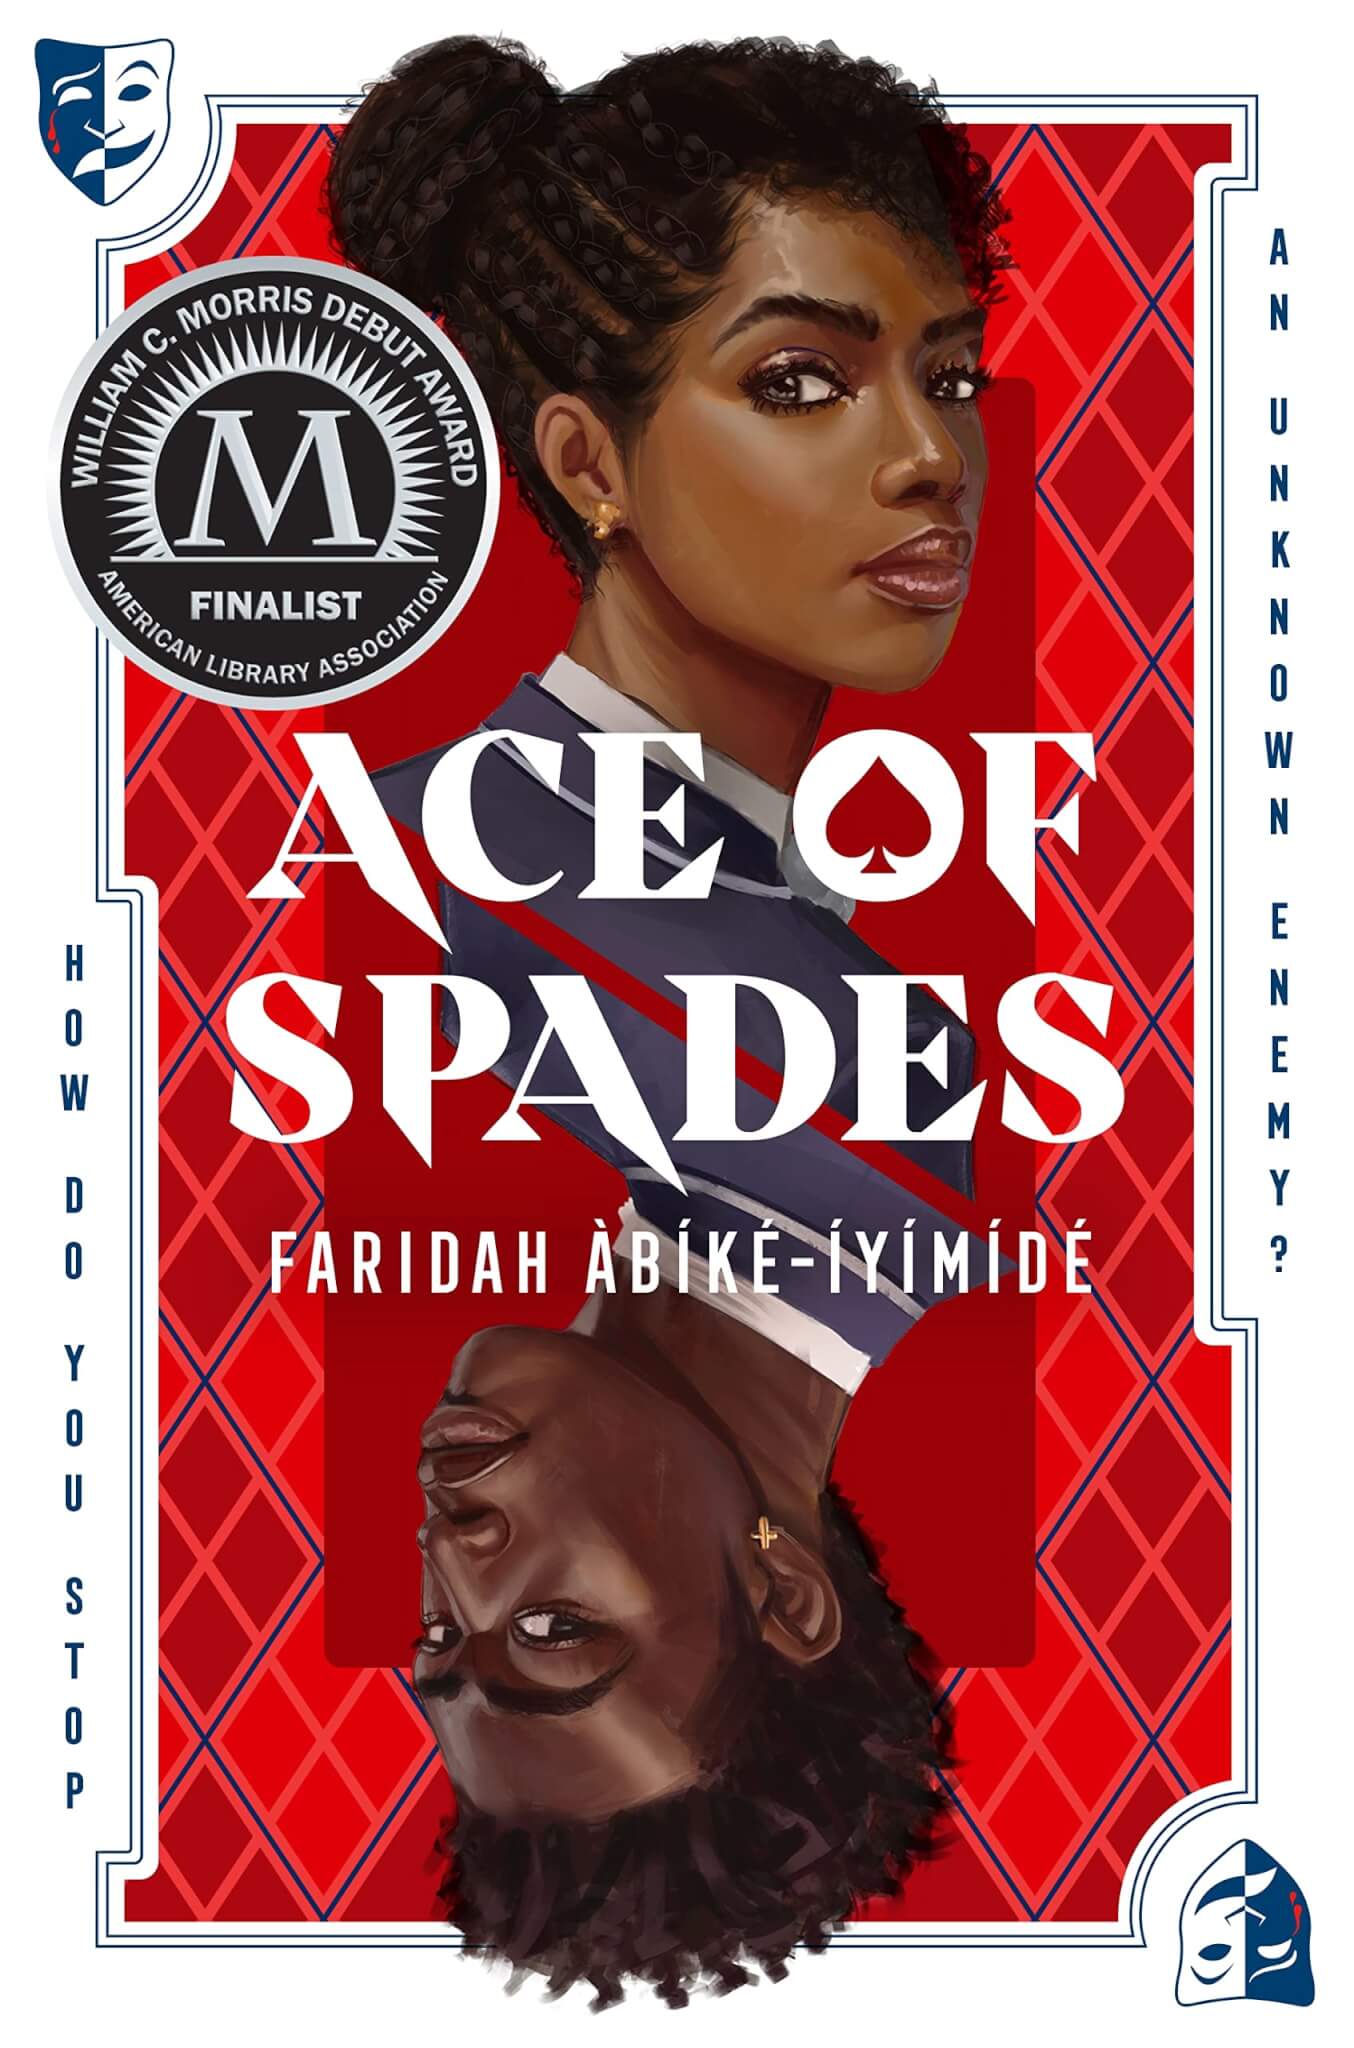 “Ace of Spades” (2021) by Faridah Àbíké-Íyímídé